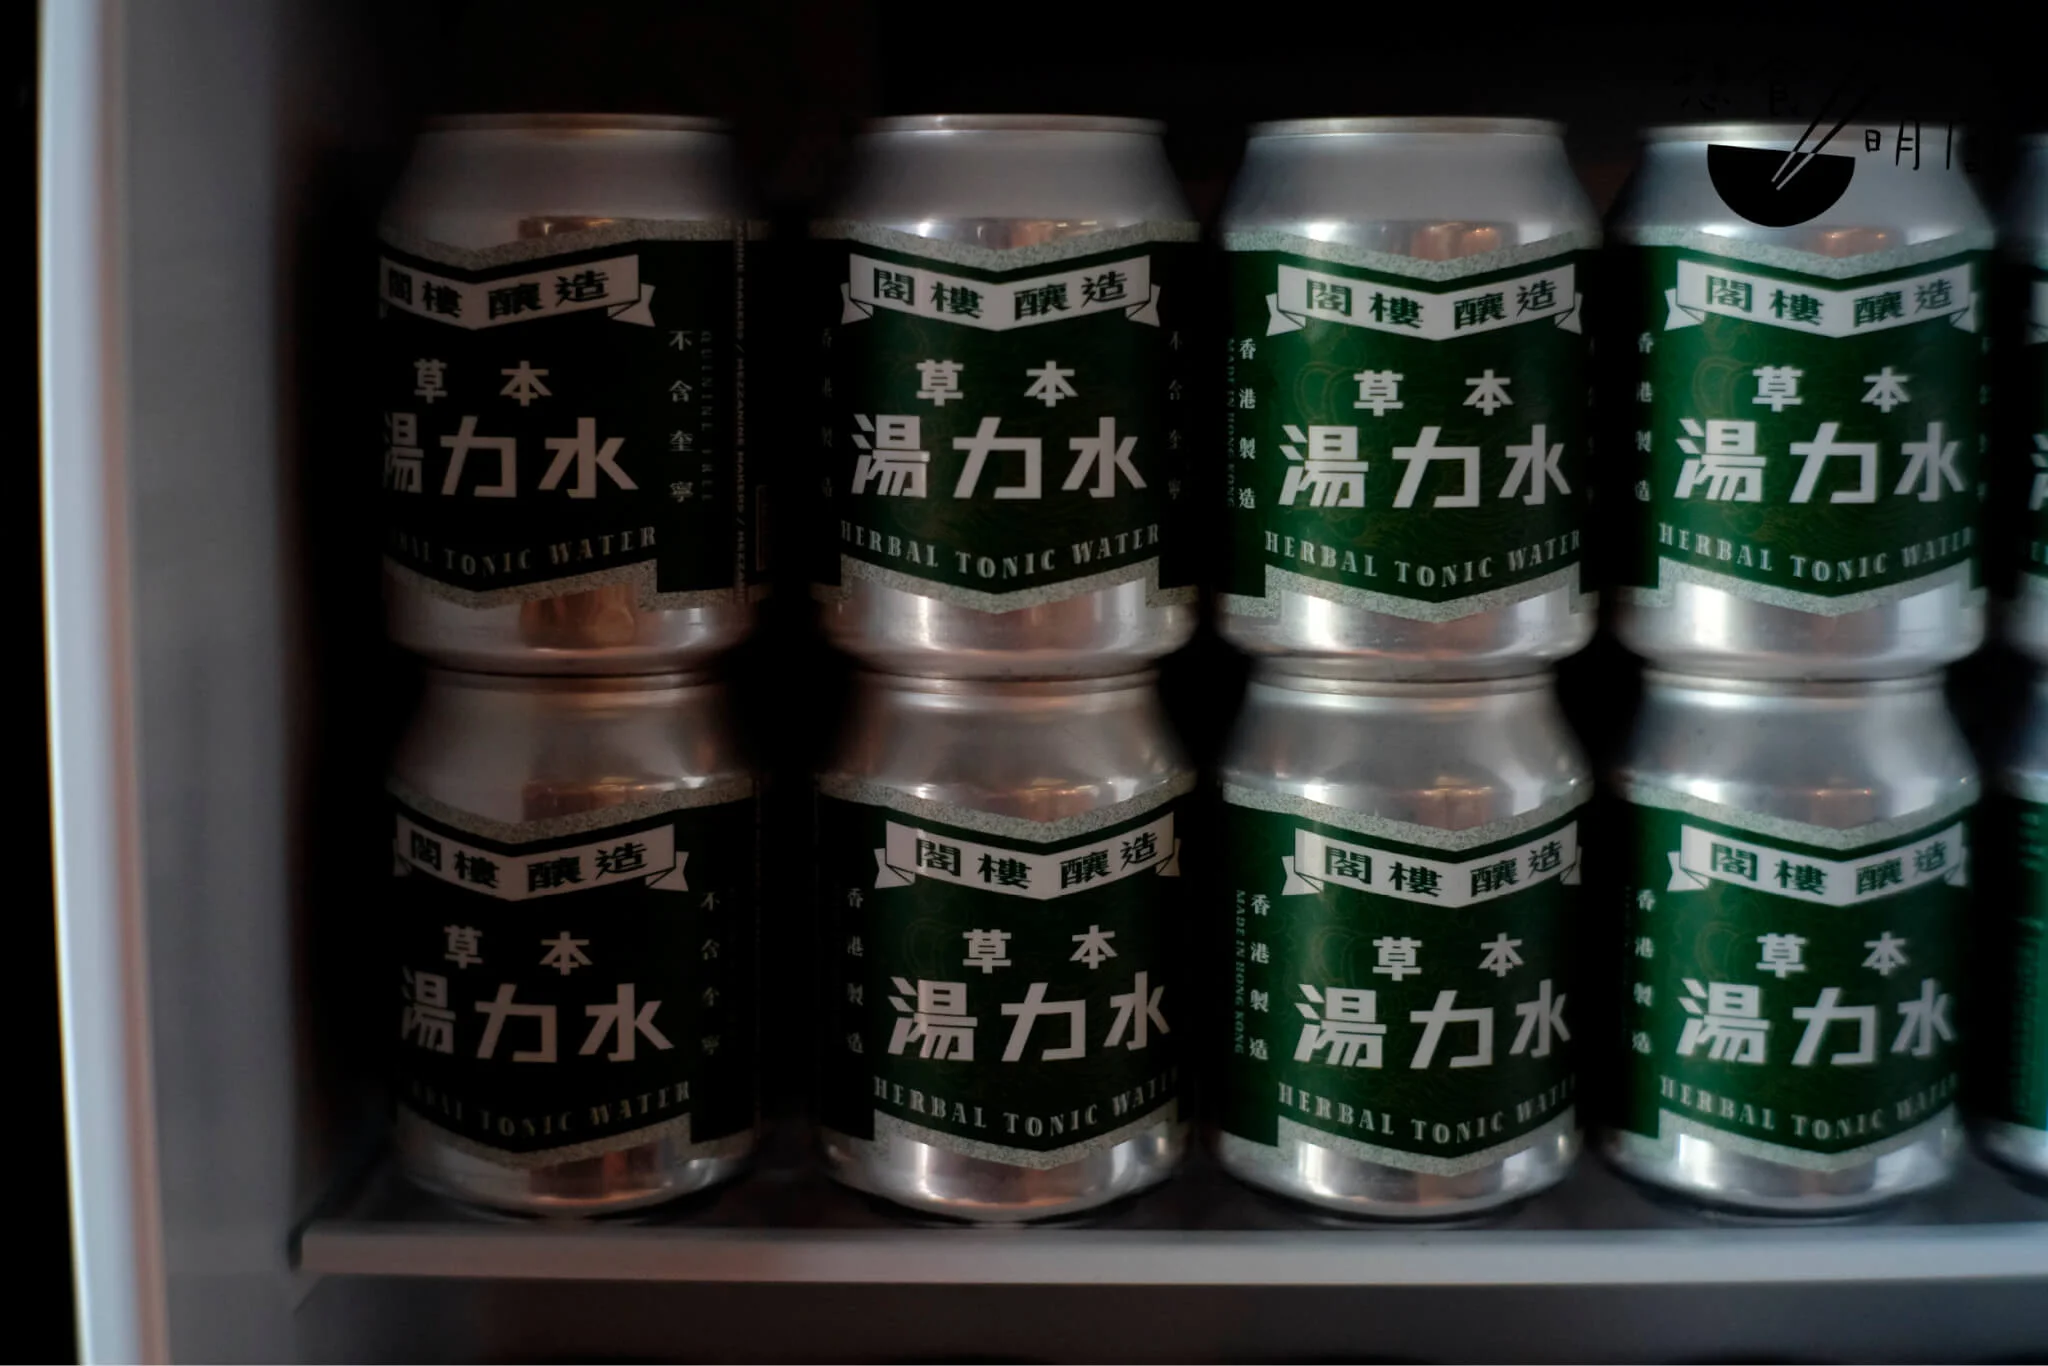 King去年先成立一條龍罐裝飲品製造商Hong Kong Cannery，先後與不同品牌合作推出各類後罐裝飲品。今年再成立新品牌「閣樓釀造」，推出自家研發罐裝酒品，「草本湯力水」正是第一款產品。